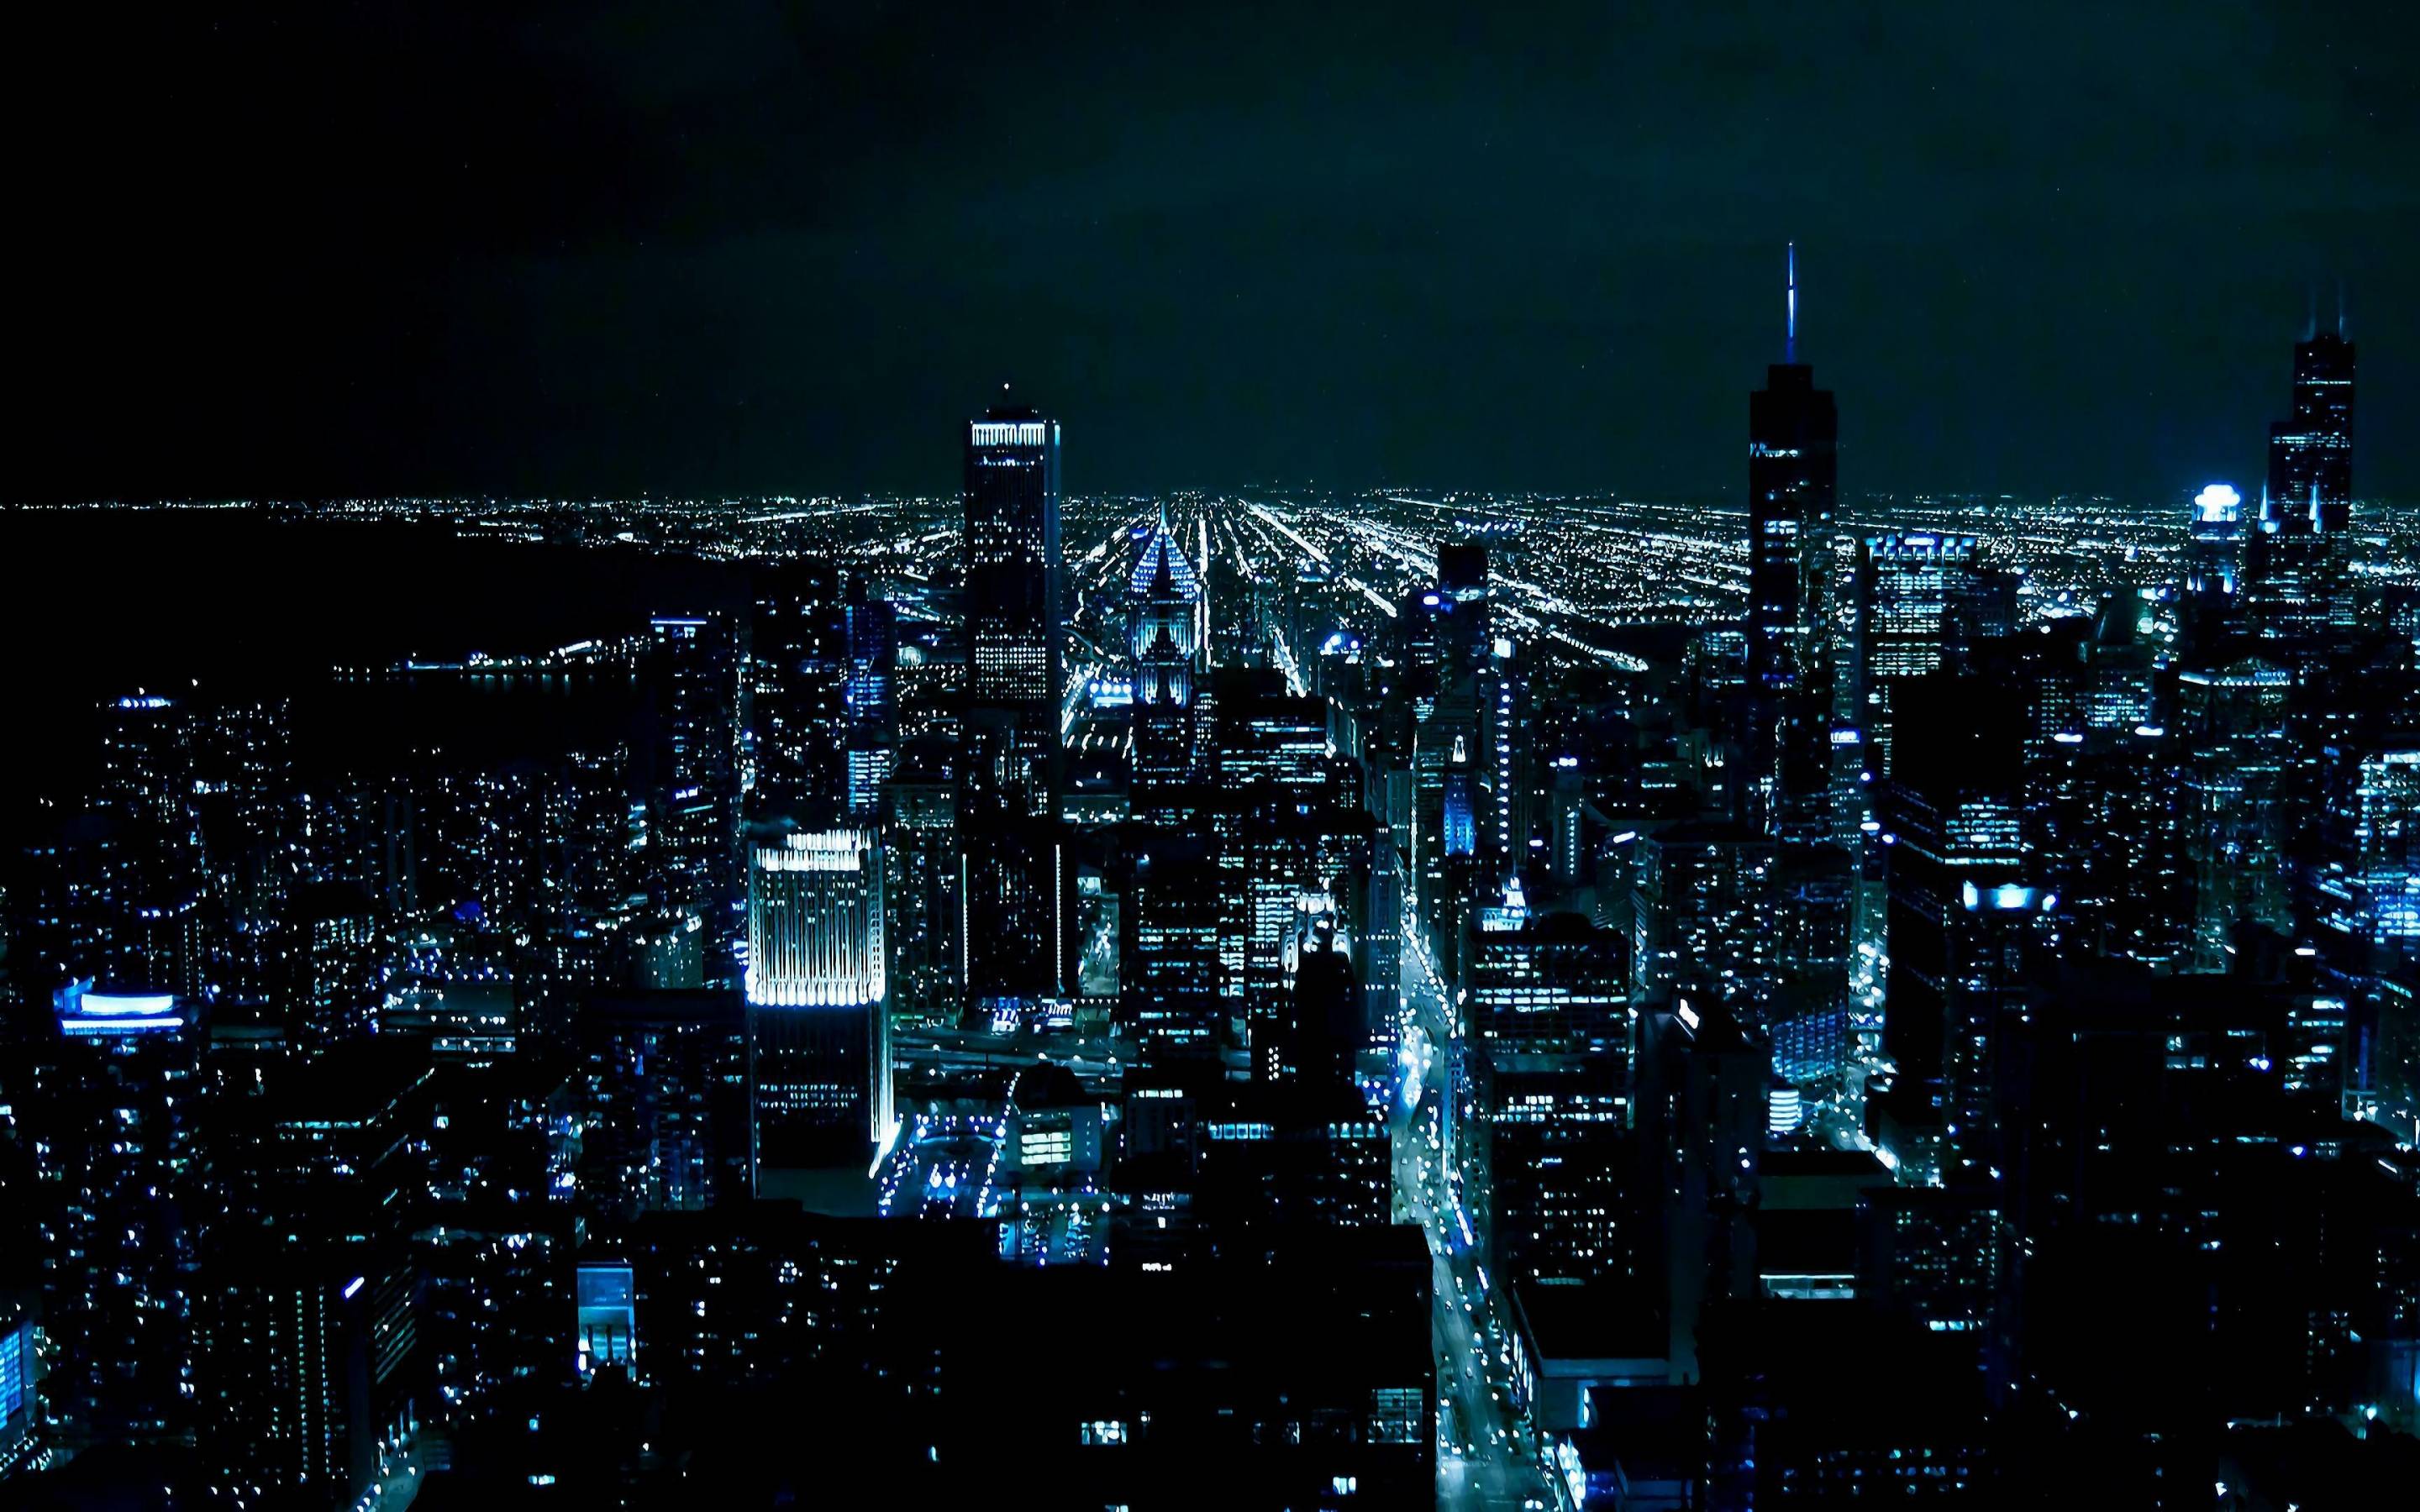 Chicago Night Macbook Pro Retina Wallpaper, HD City 4K Wallpaper, Image, Photo and Background